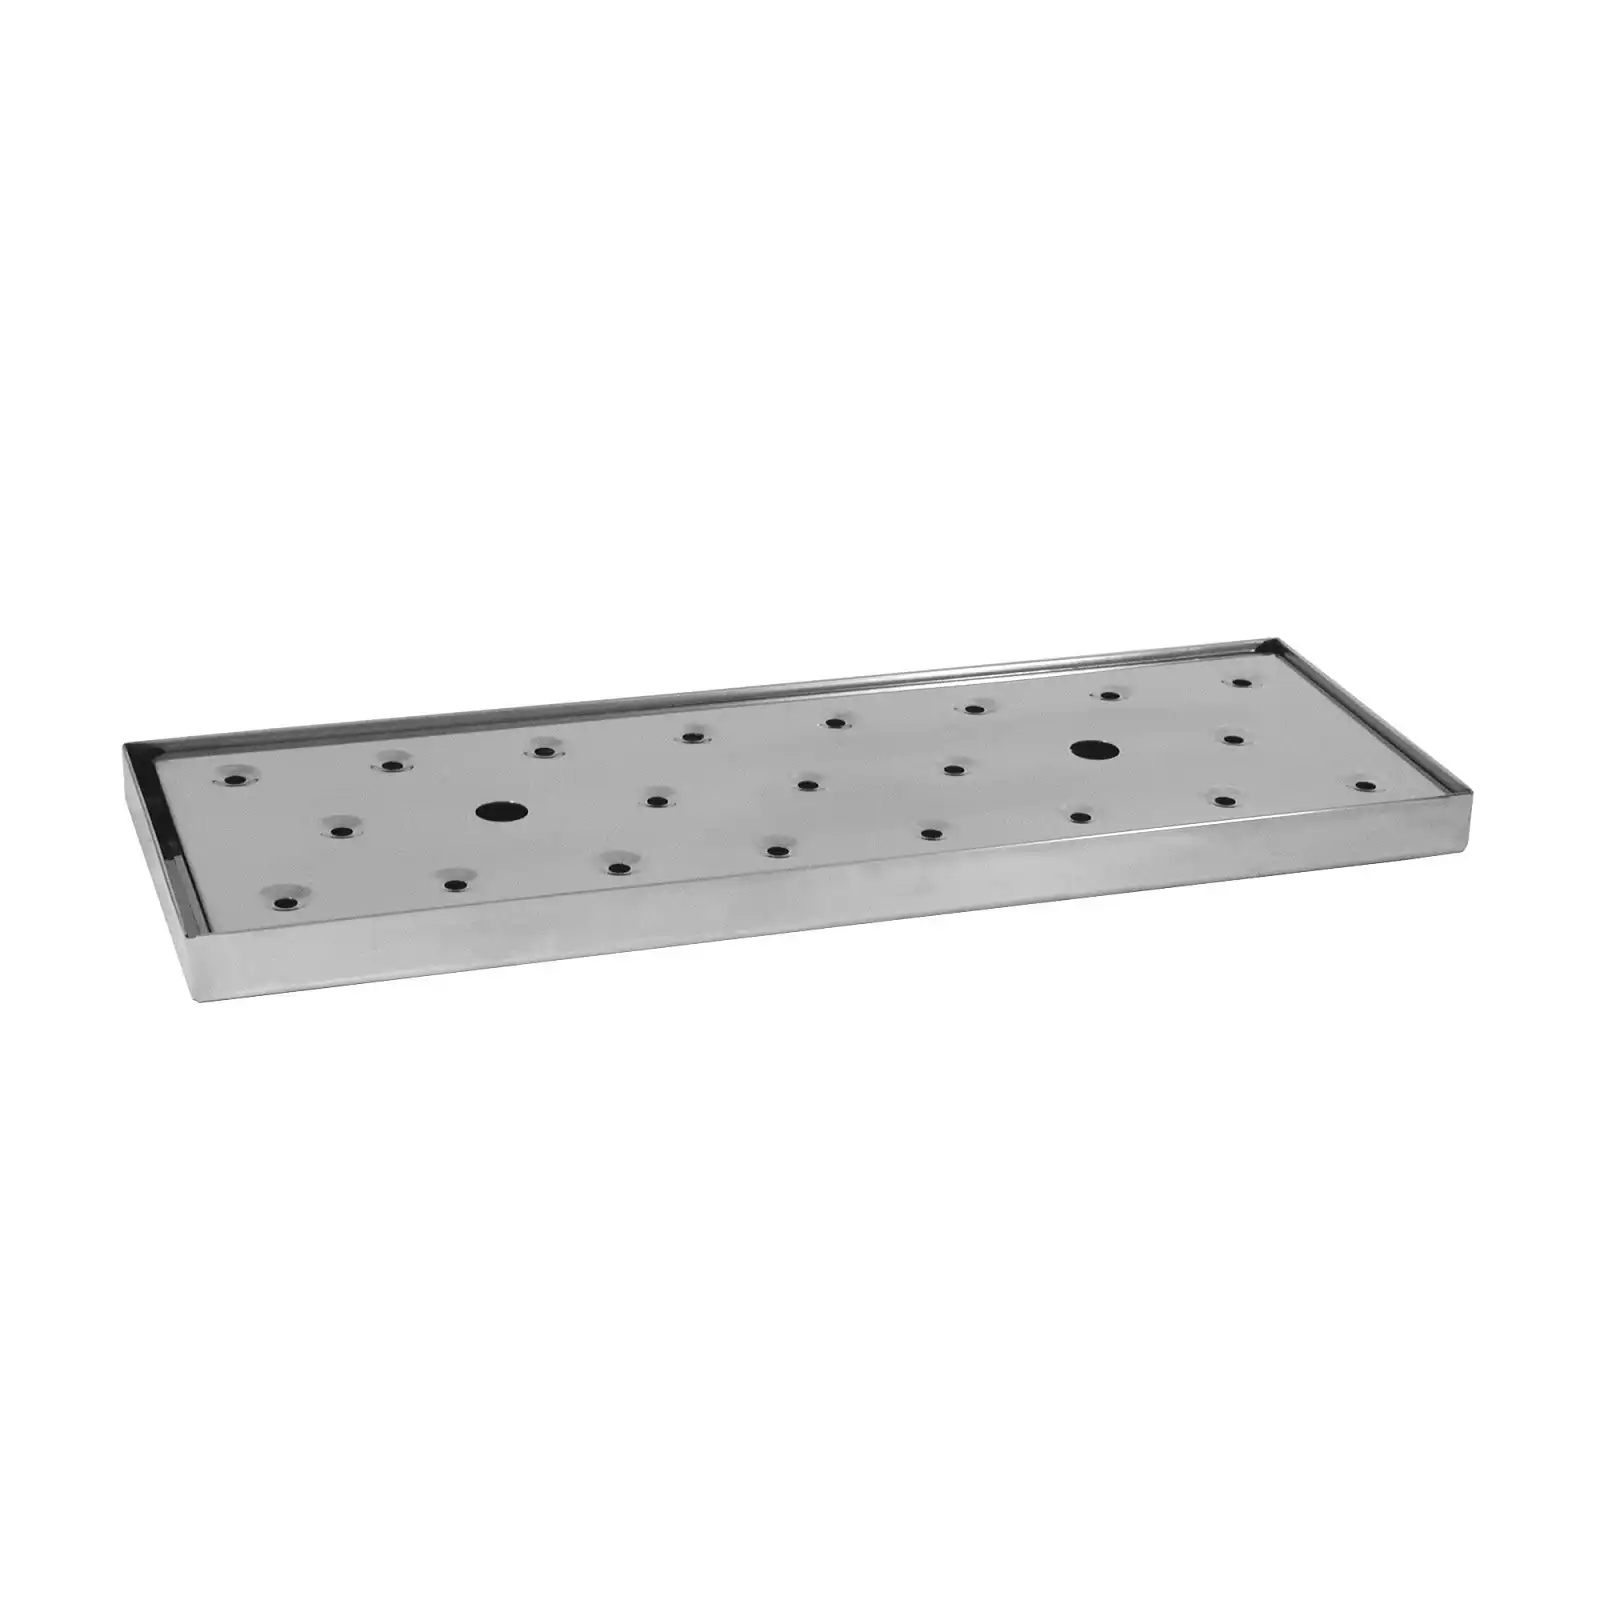 Aluminium Drip Tray (10 Pack)  Everdure by Heston Blumenthal